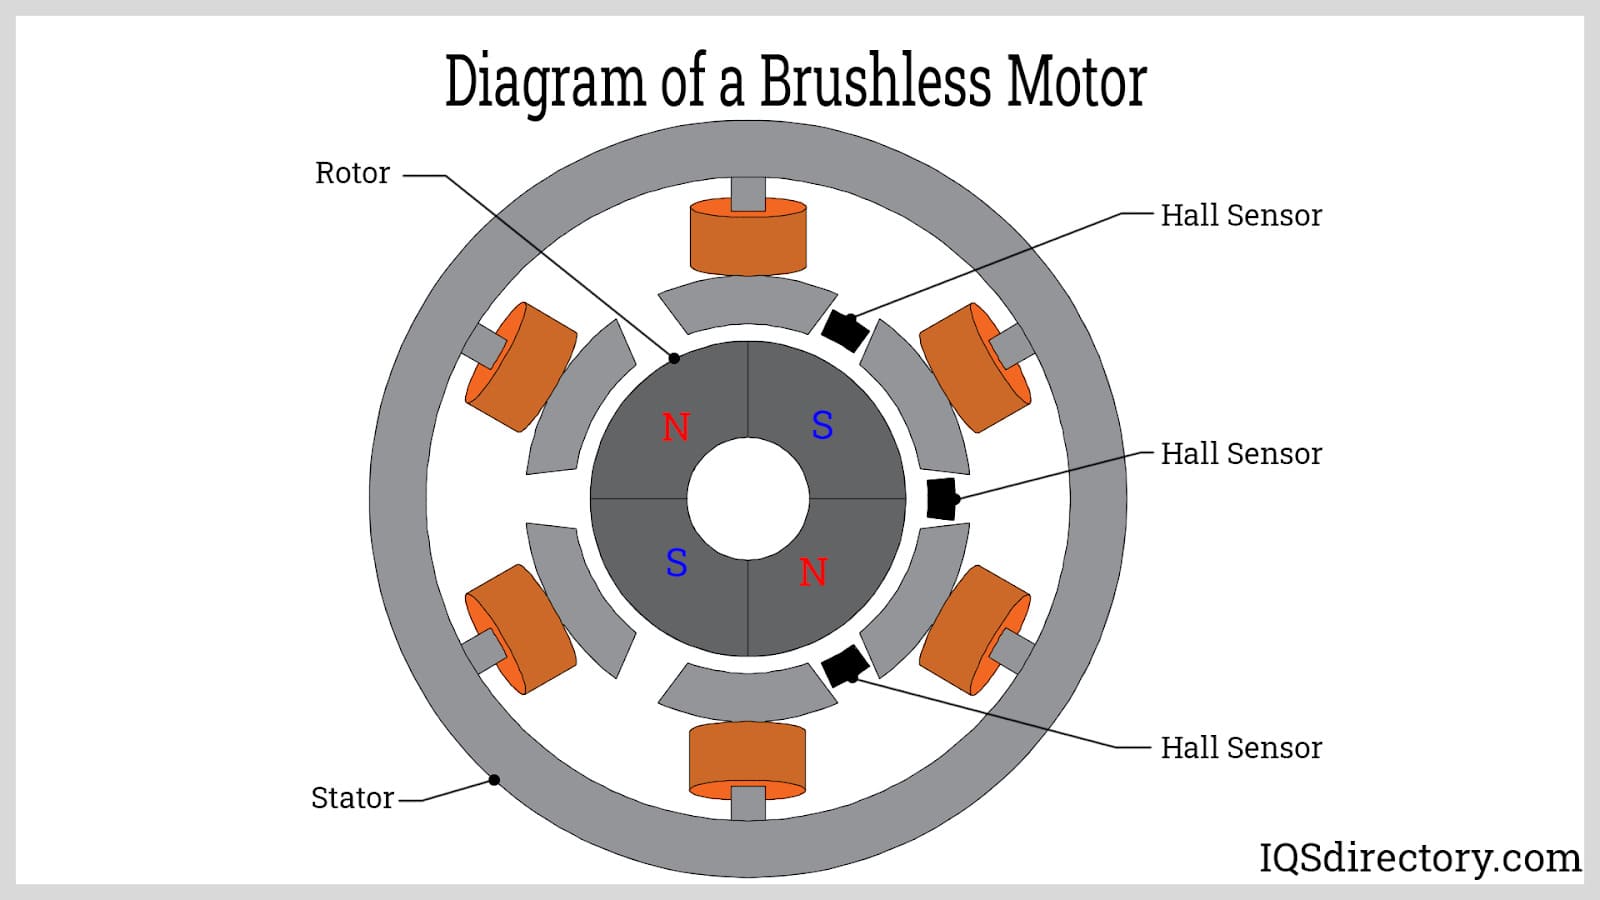 Diagram of a Brushless Motor